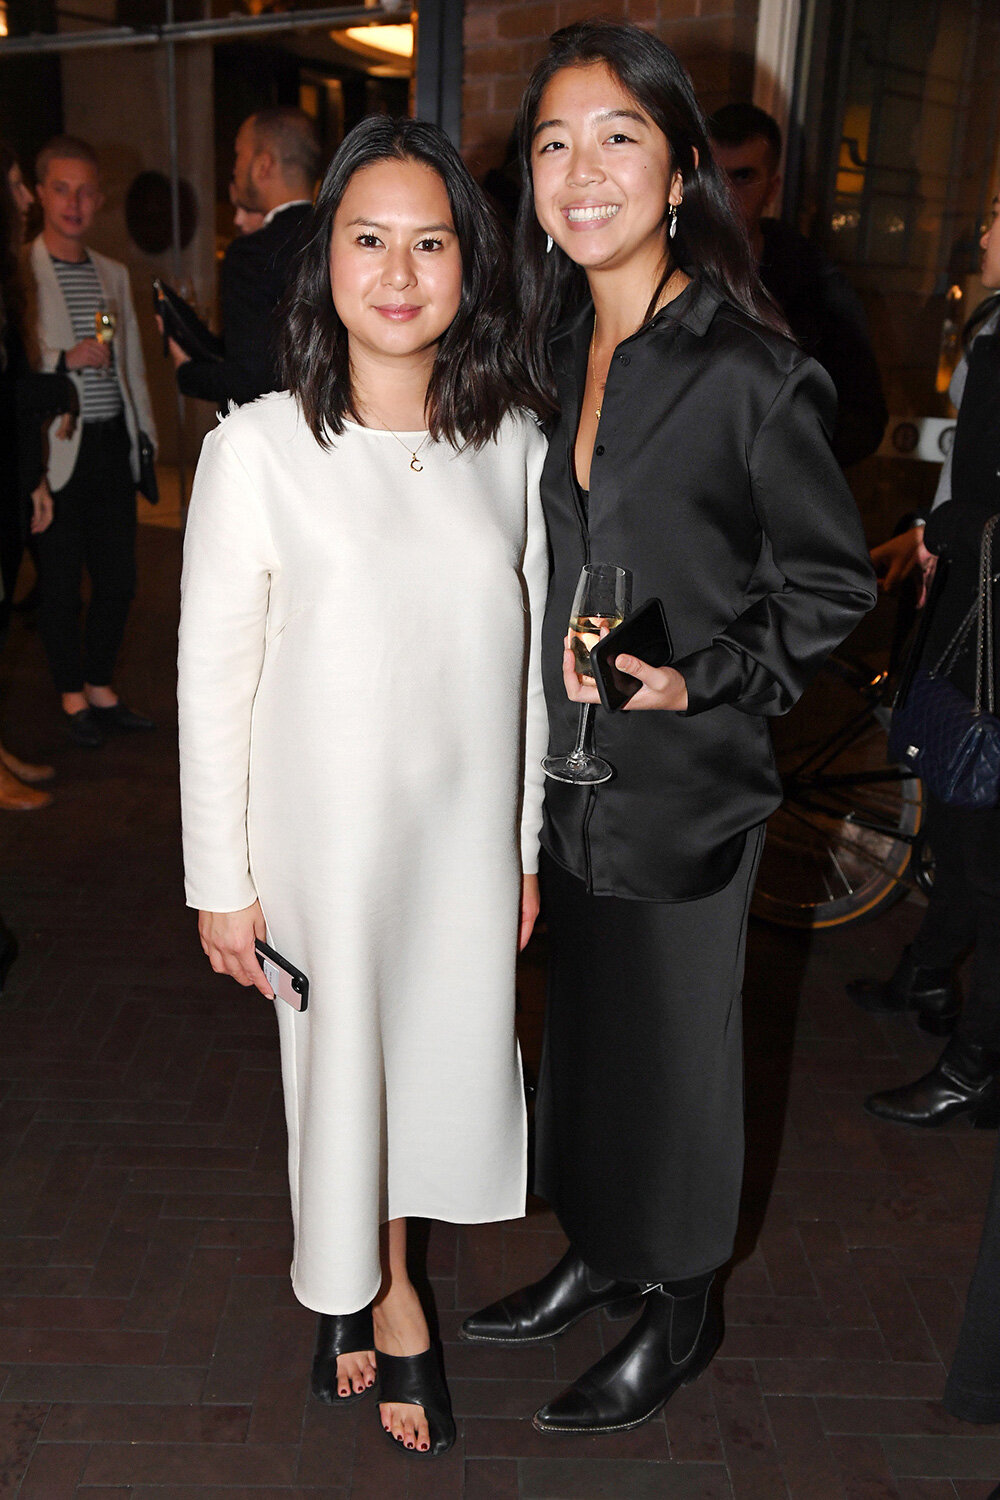 Harper’s Bazaar Junior Fashion Editor Caroline Tran with Harper’s Bazaar’s Sam Wong